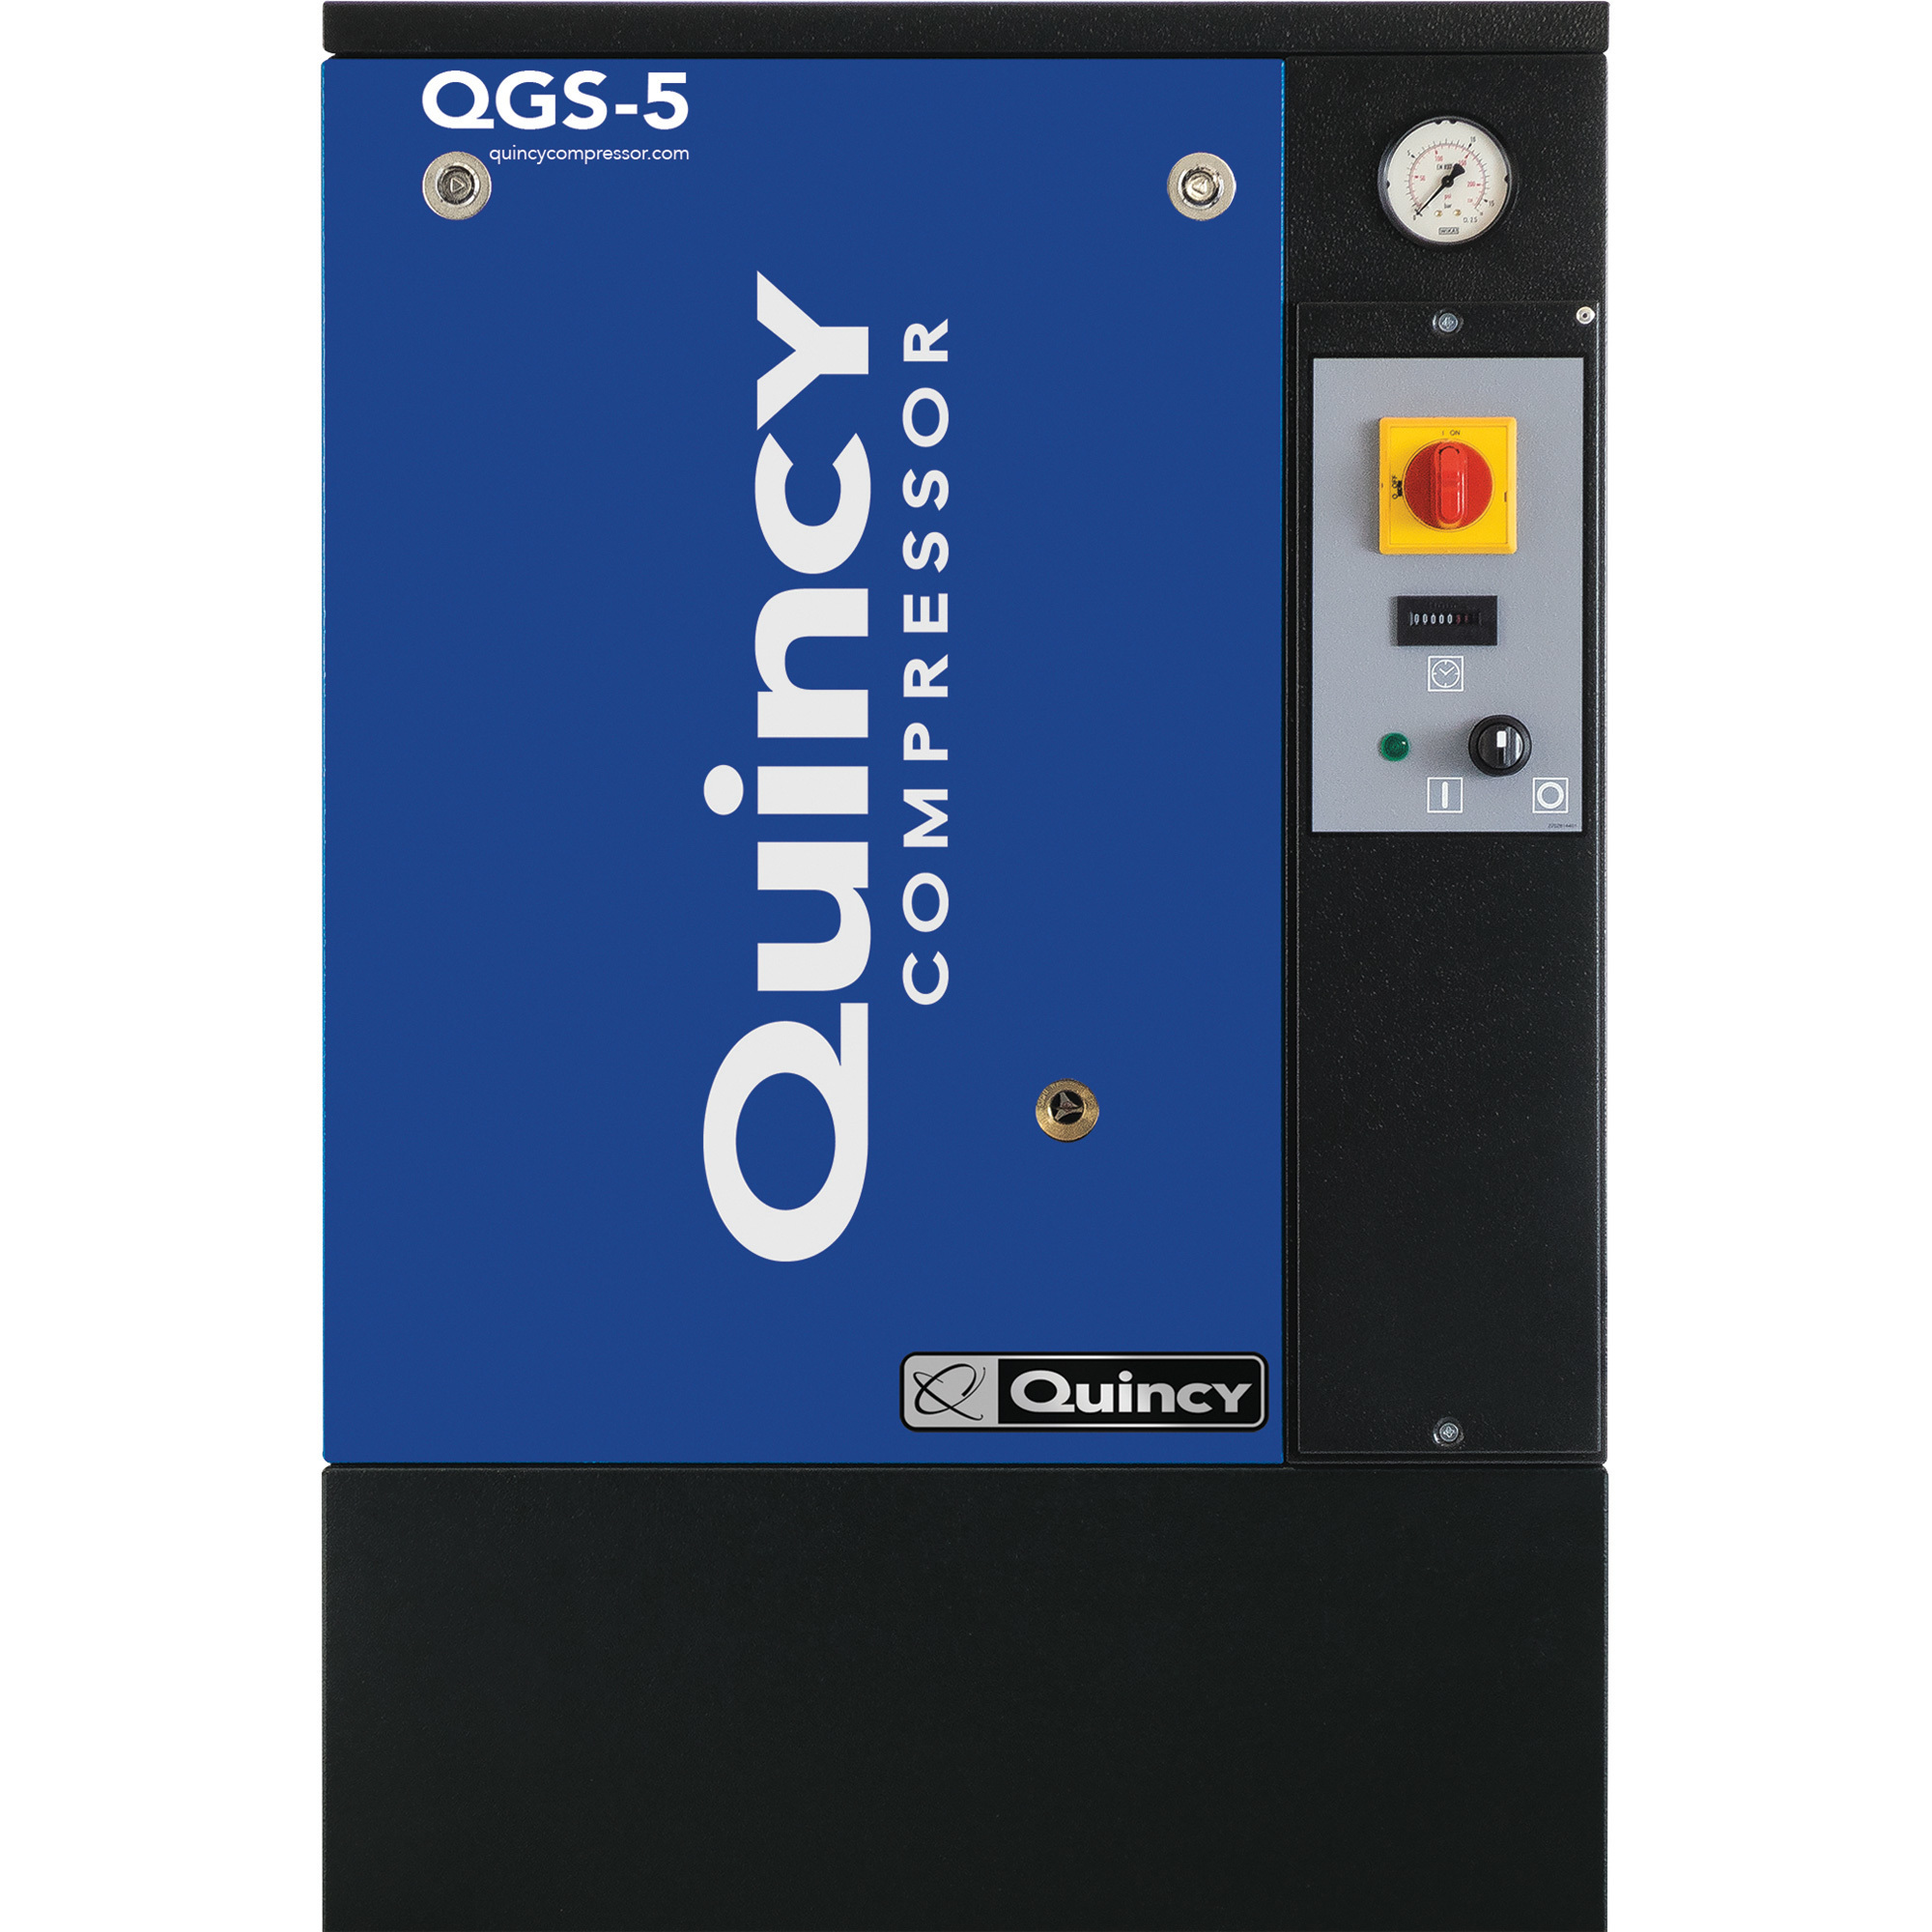 Quincy QGS Rotary Screw Air Compressor, 5 HP, Tri-Voltage: 200-208V, 230V, 460V, 3-Phase, Floor Mount, 16.6 CFM @ 90 PSI, Model 4152051912